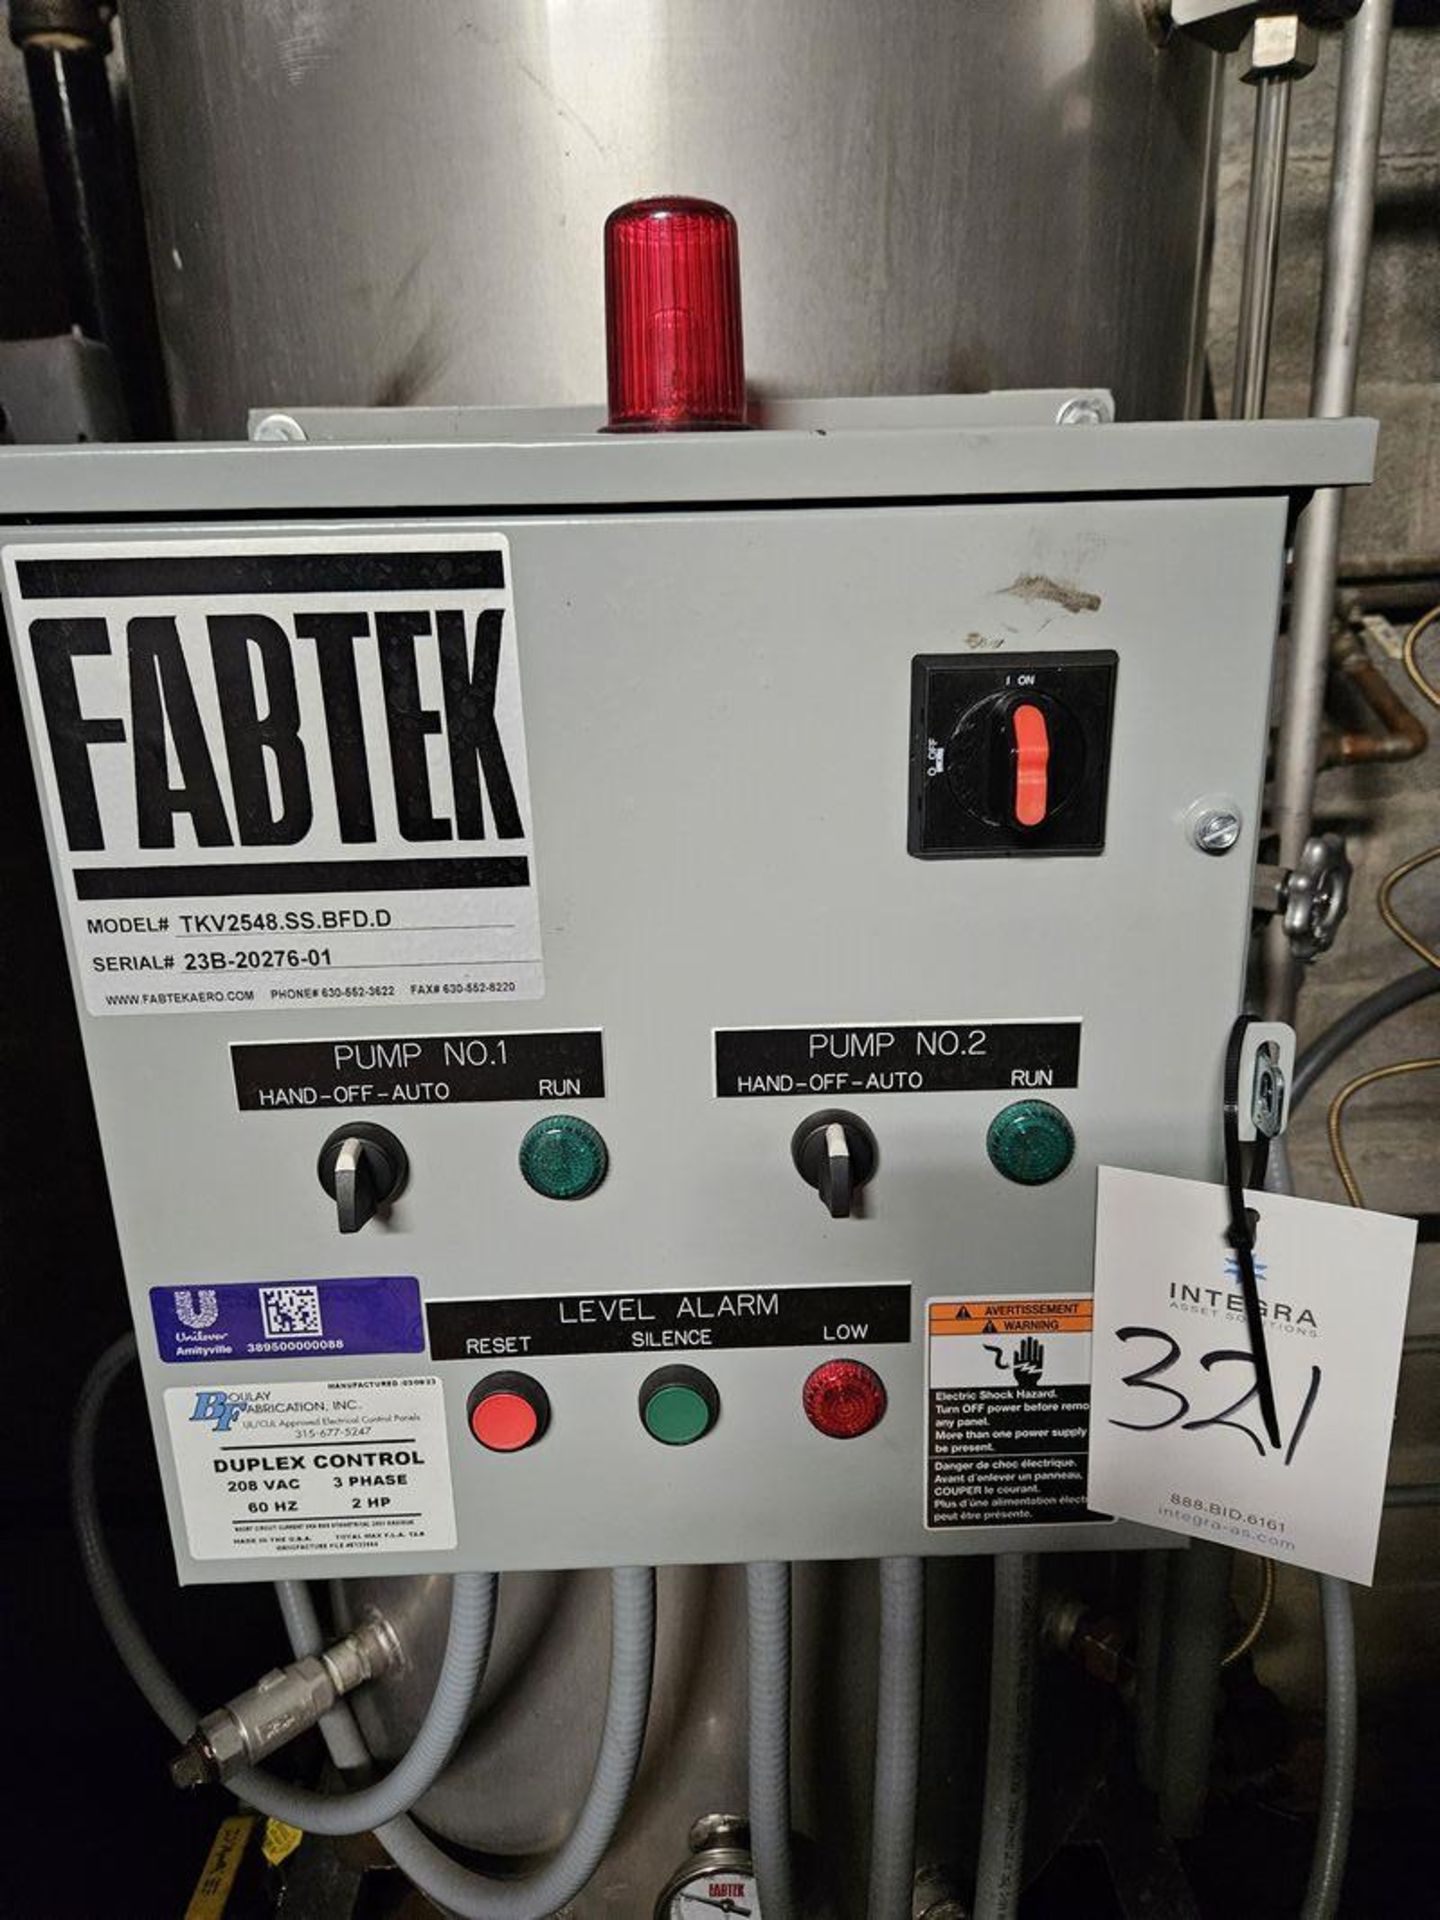 Fabtek TKV2548.SS.BFD.D Stainless Steel Boiler Feed System - Image 2 of 2